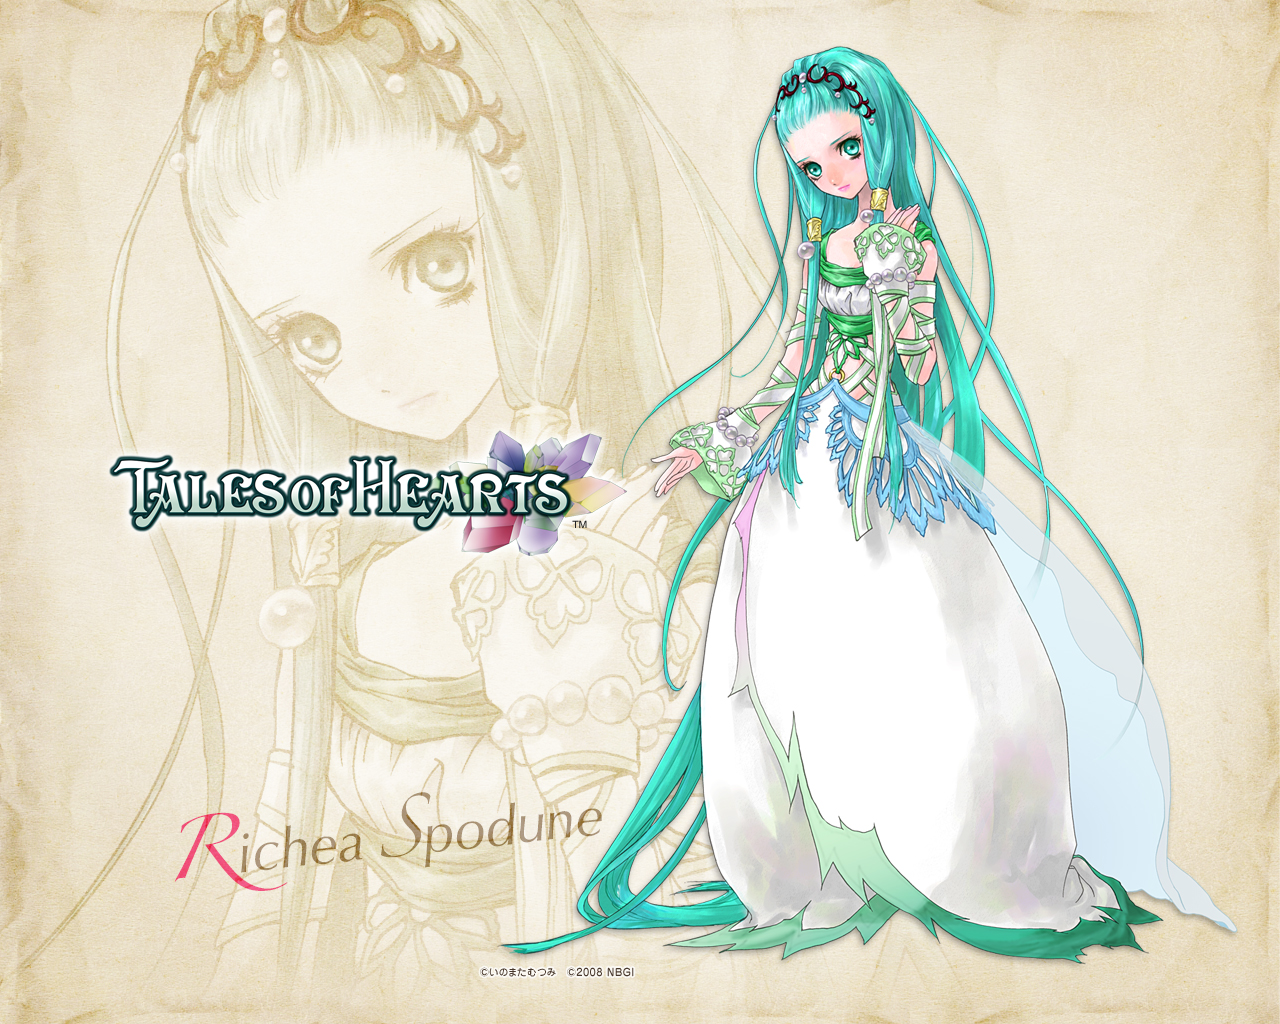 Richea Spodune (Anime Version) - 1280x1024
Richea Spodune (Anime Version) - 1280x1024
